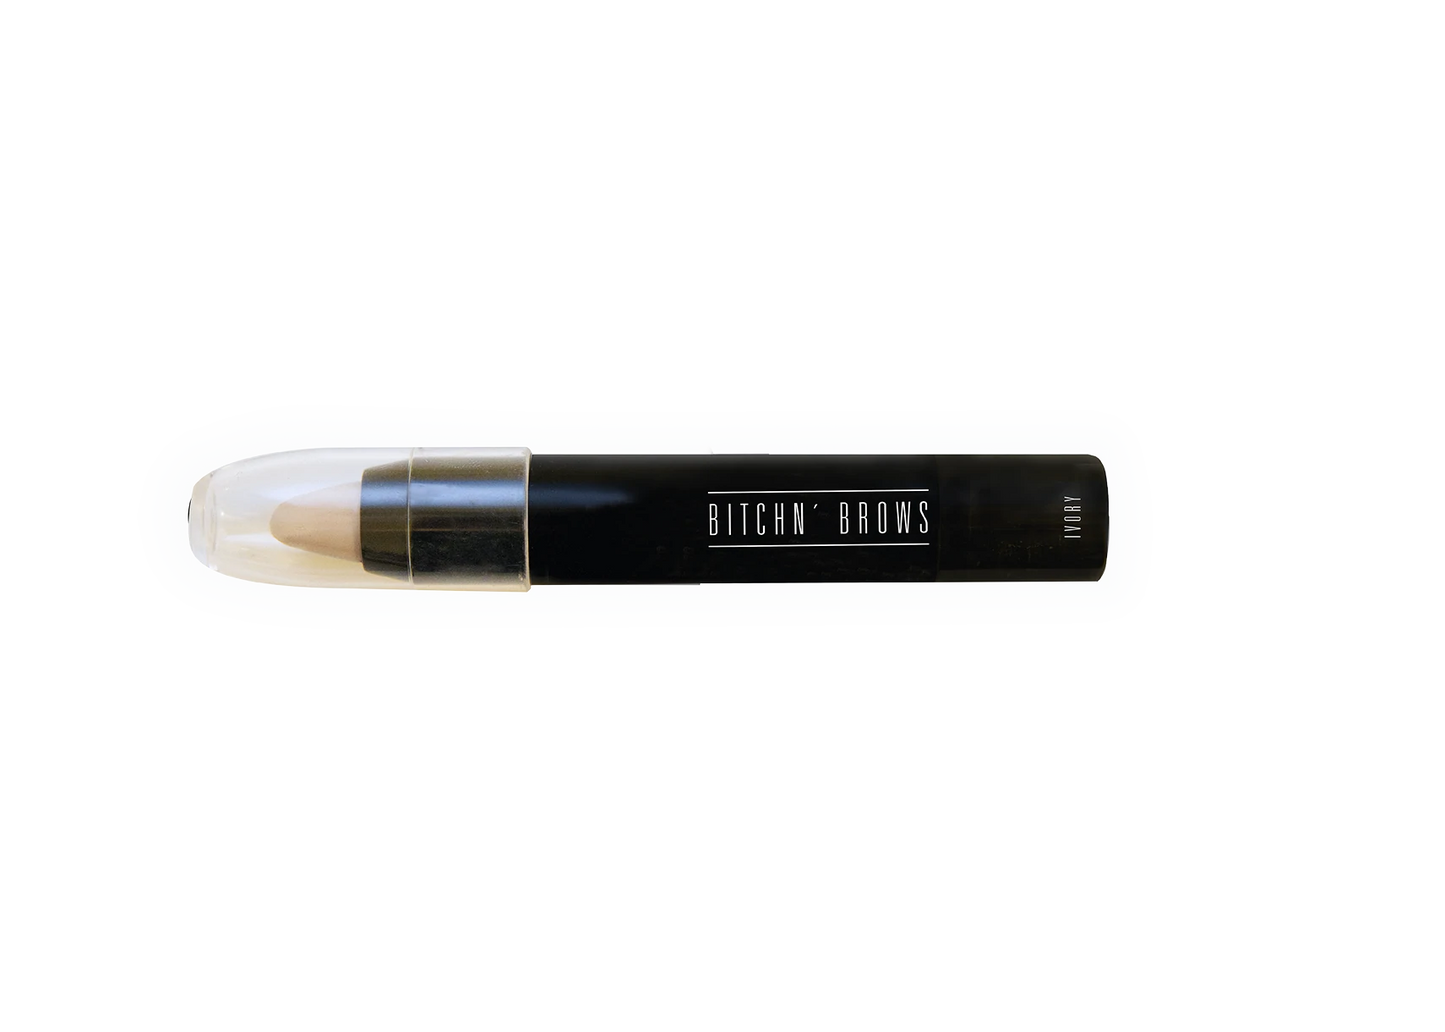 Bitchn` Brows - Highlighter Pen